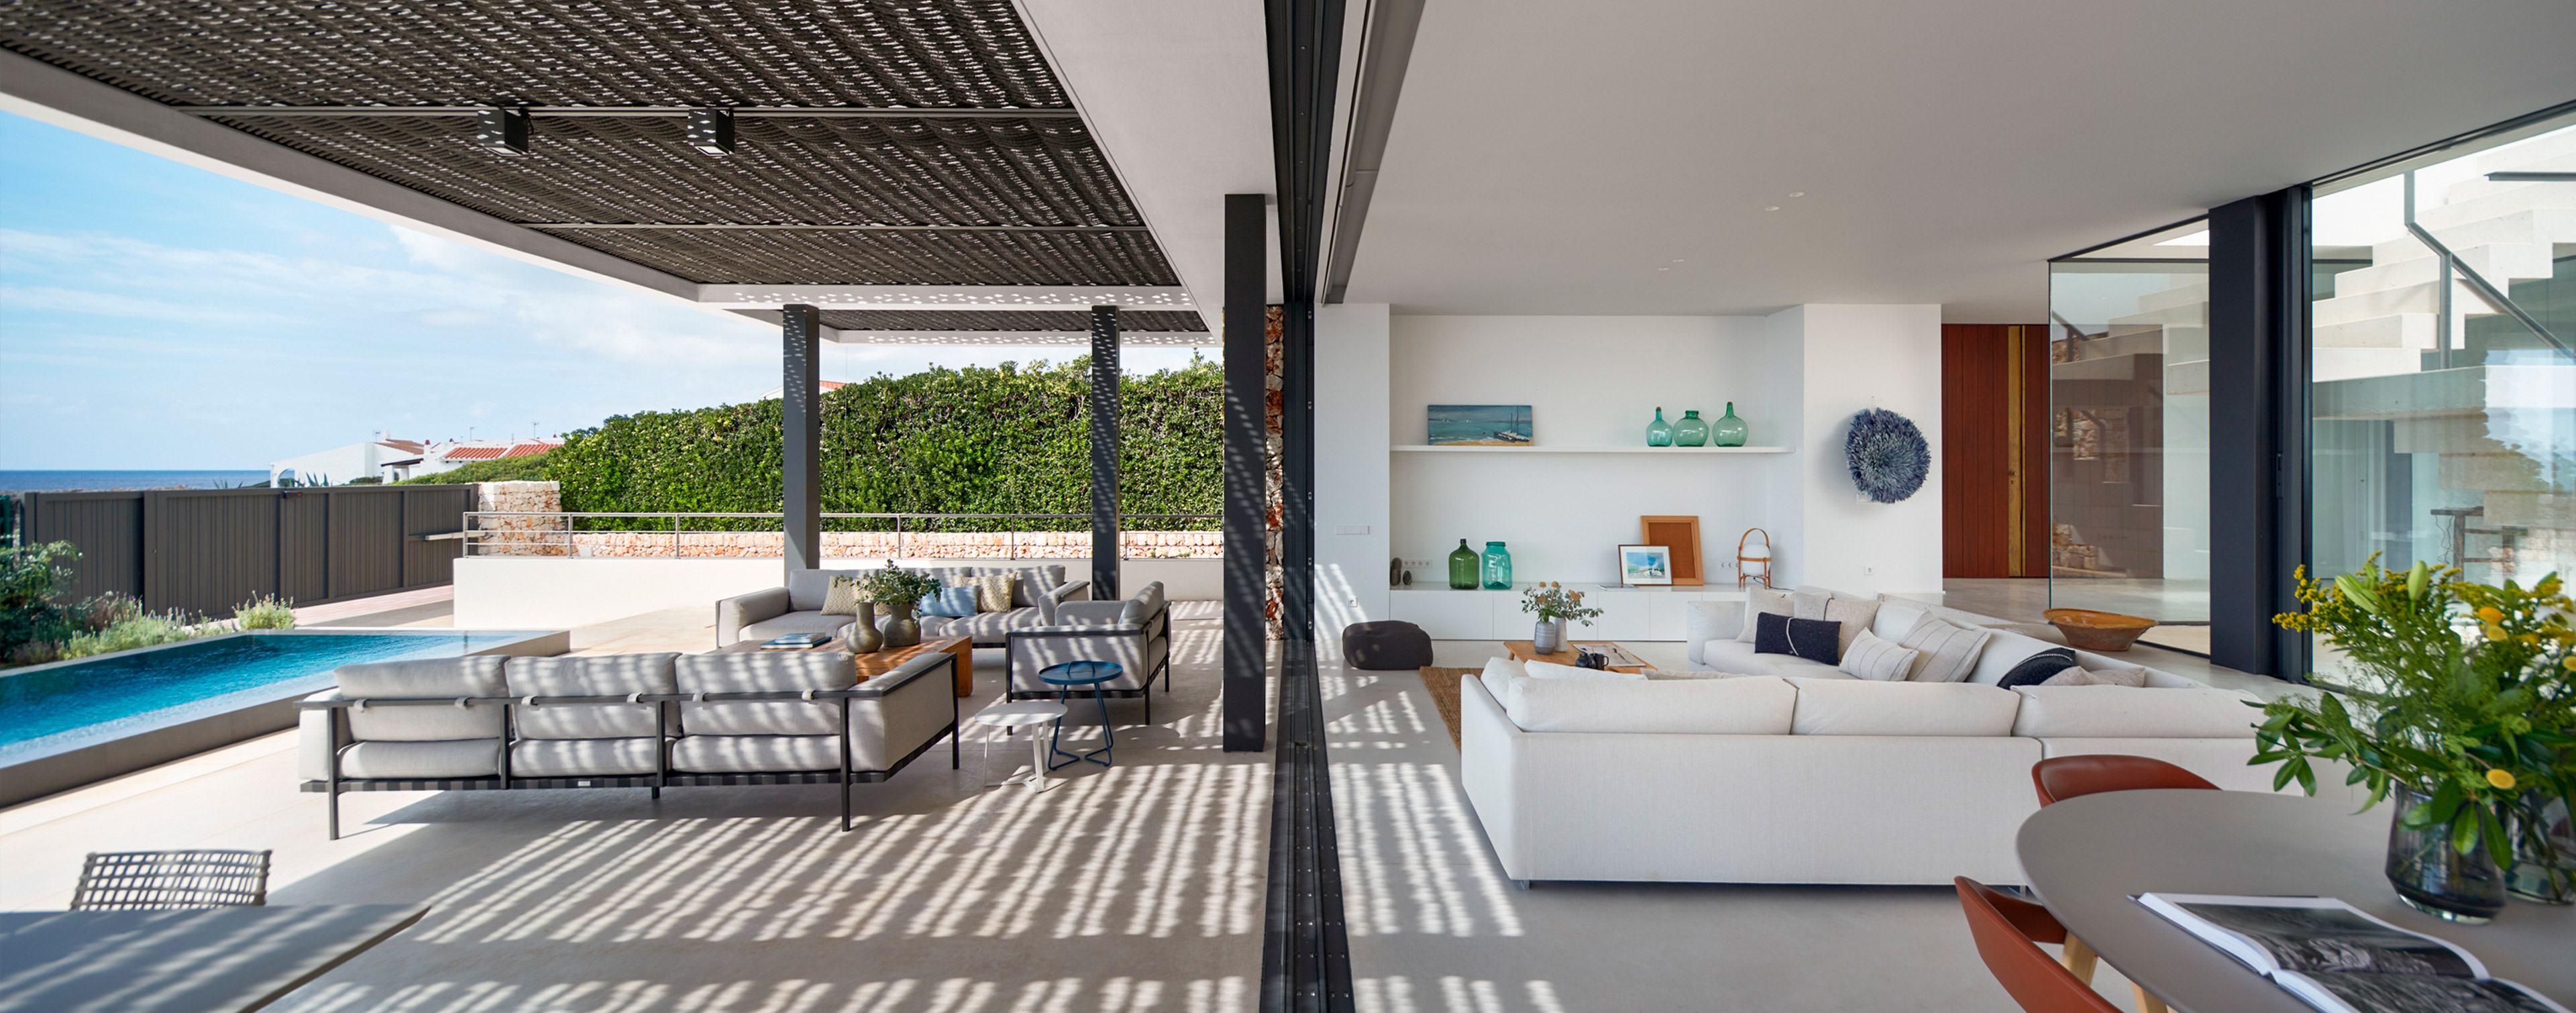 luv studio luxury architects menorca binibequer house IMG 02 - LUV Studio - Architecture et design - Barcelone